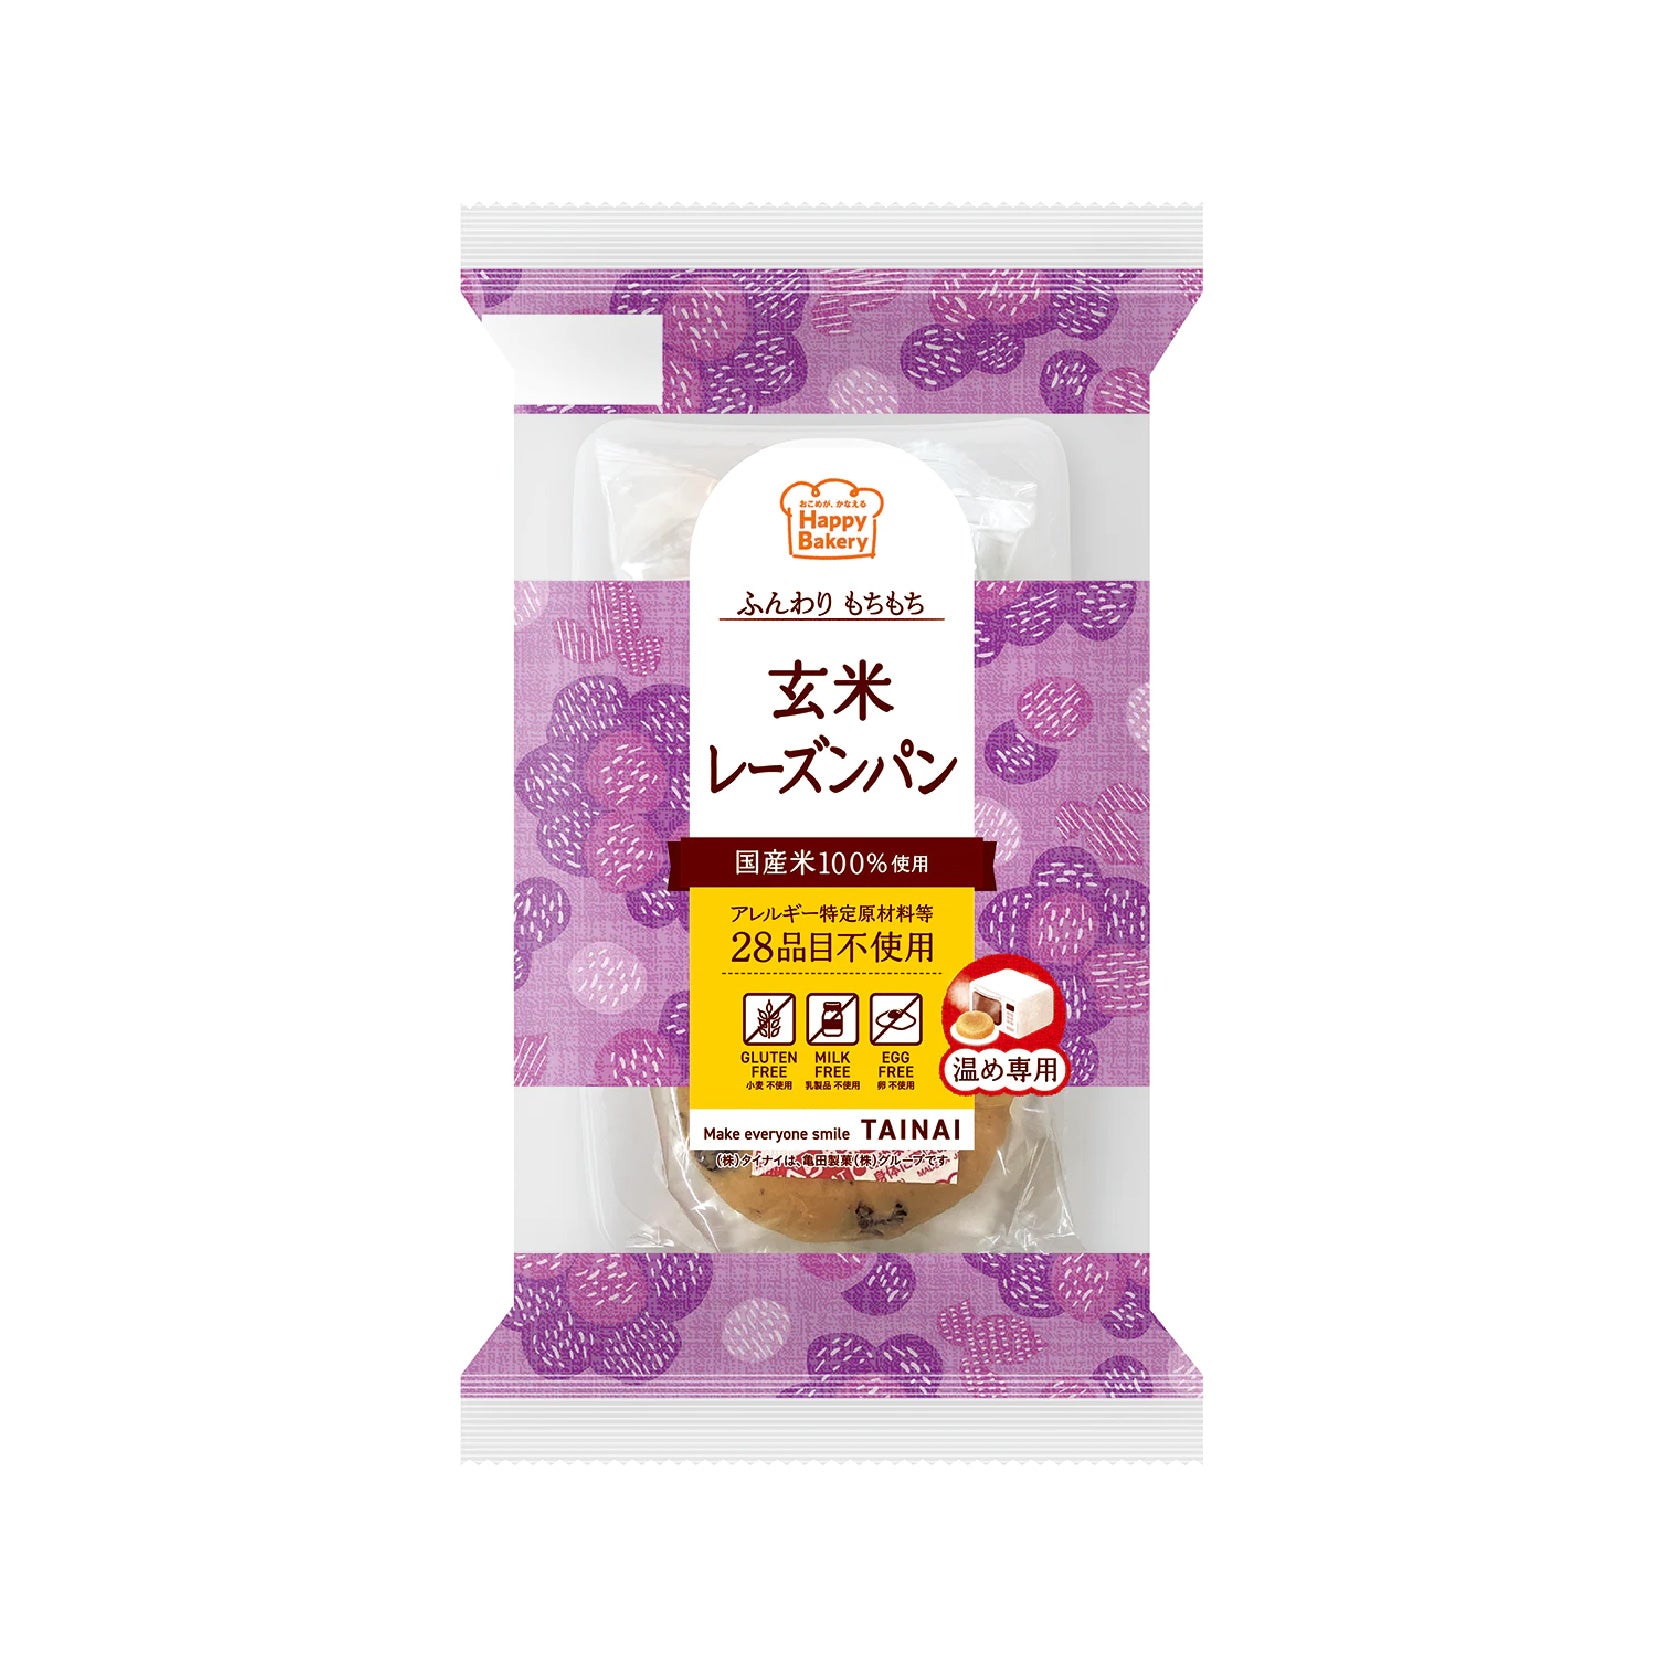 Tainai 無麩質純素玄米提子麵包 (3個裝) BBD: 3-Jun 24